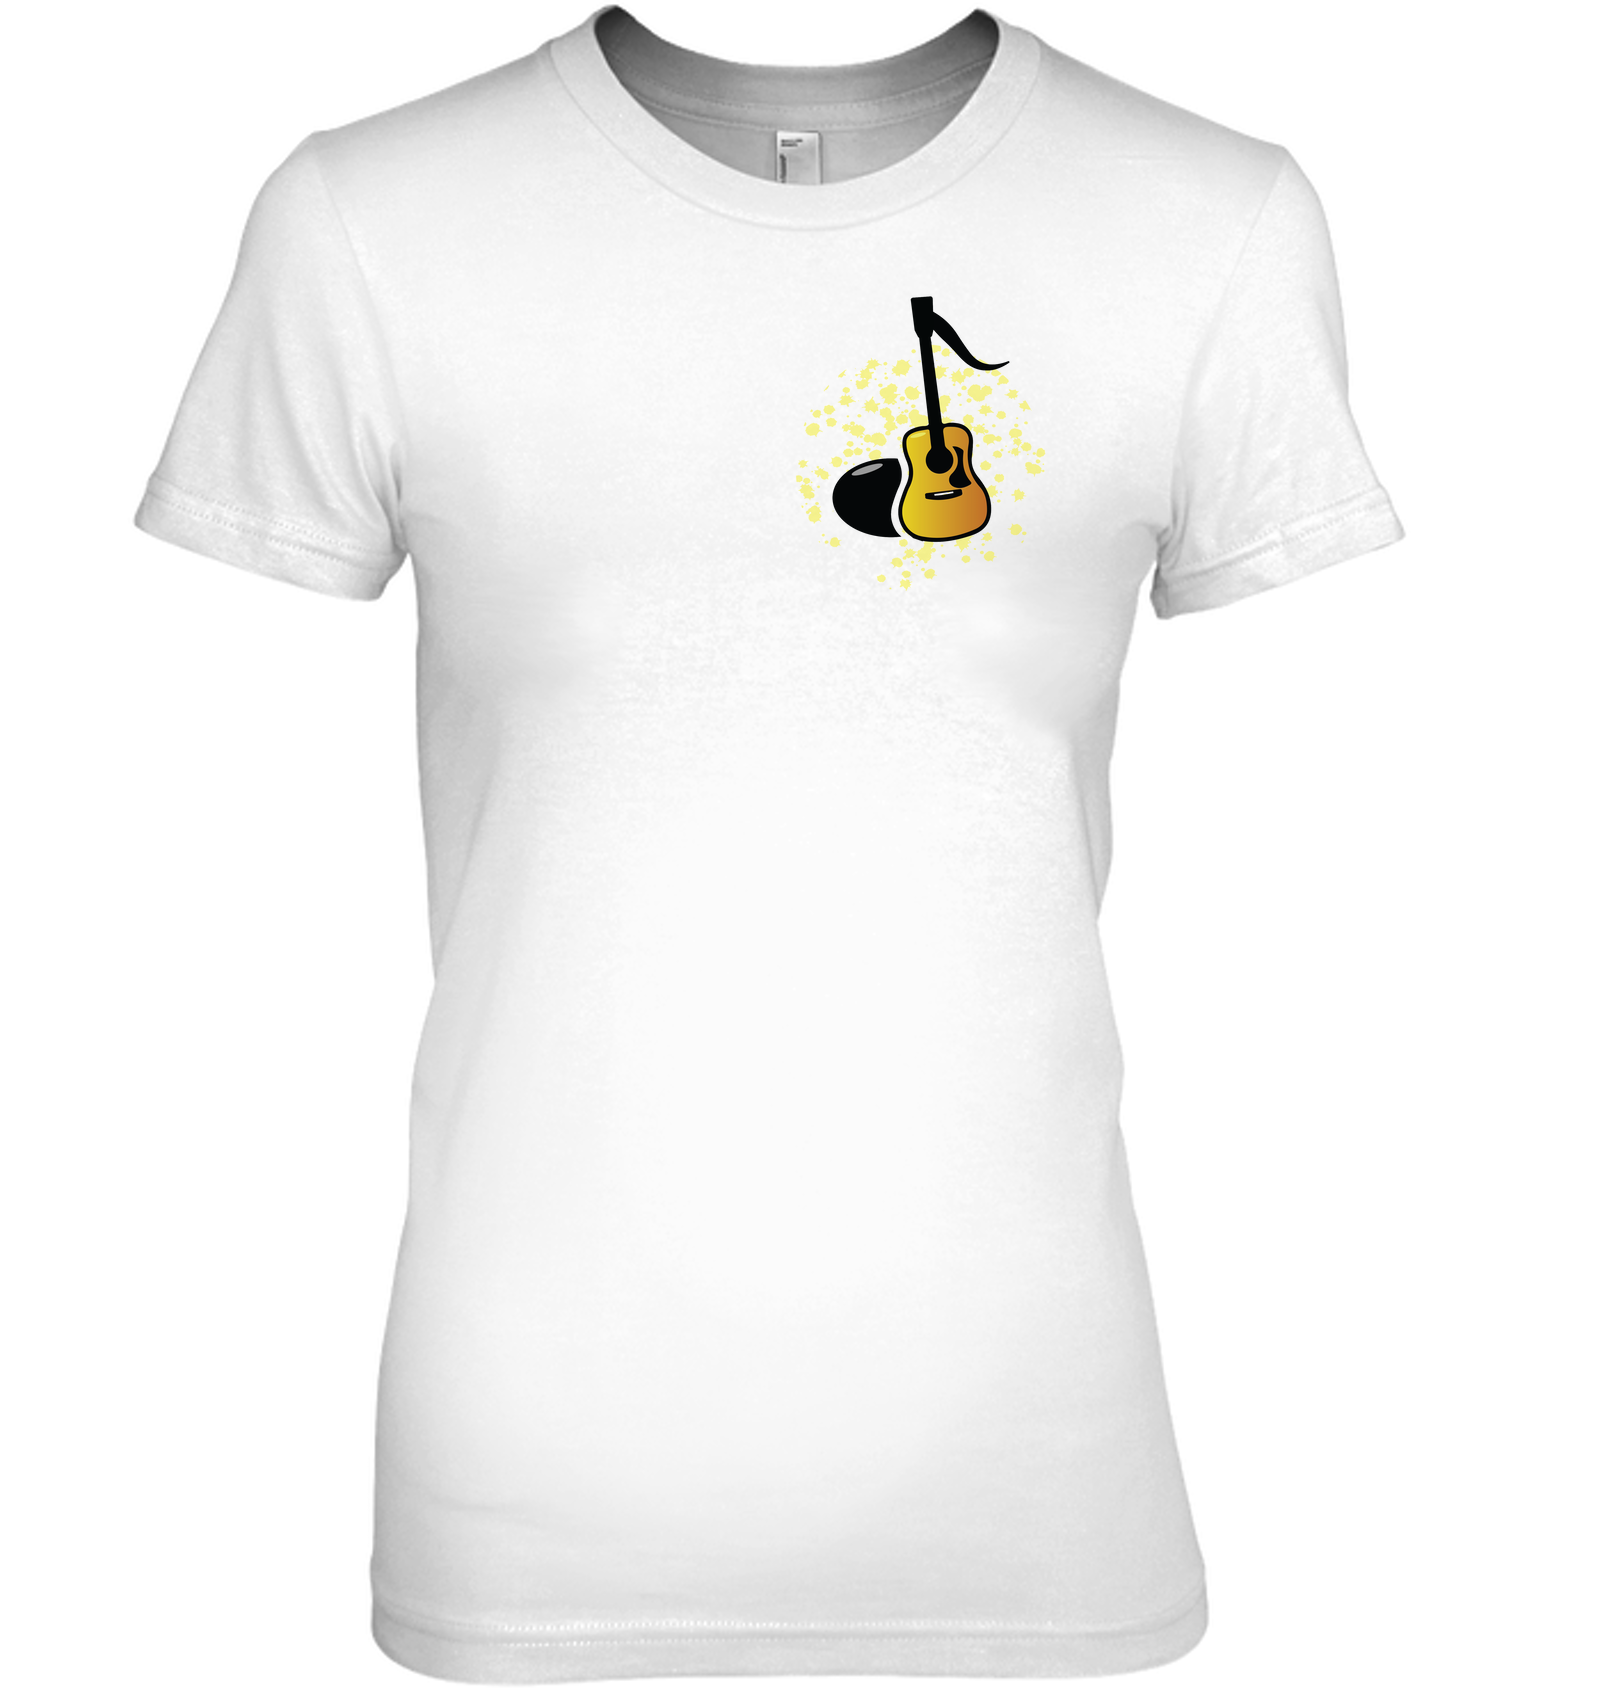 Acoustic Guitar Note (Pocket Size) - Hanes Women's Nano-T® T-Shirt